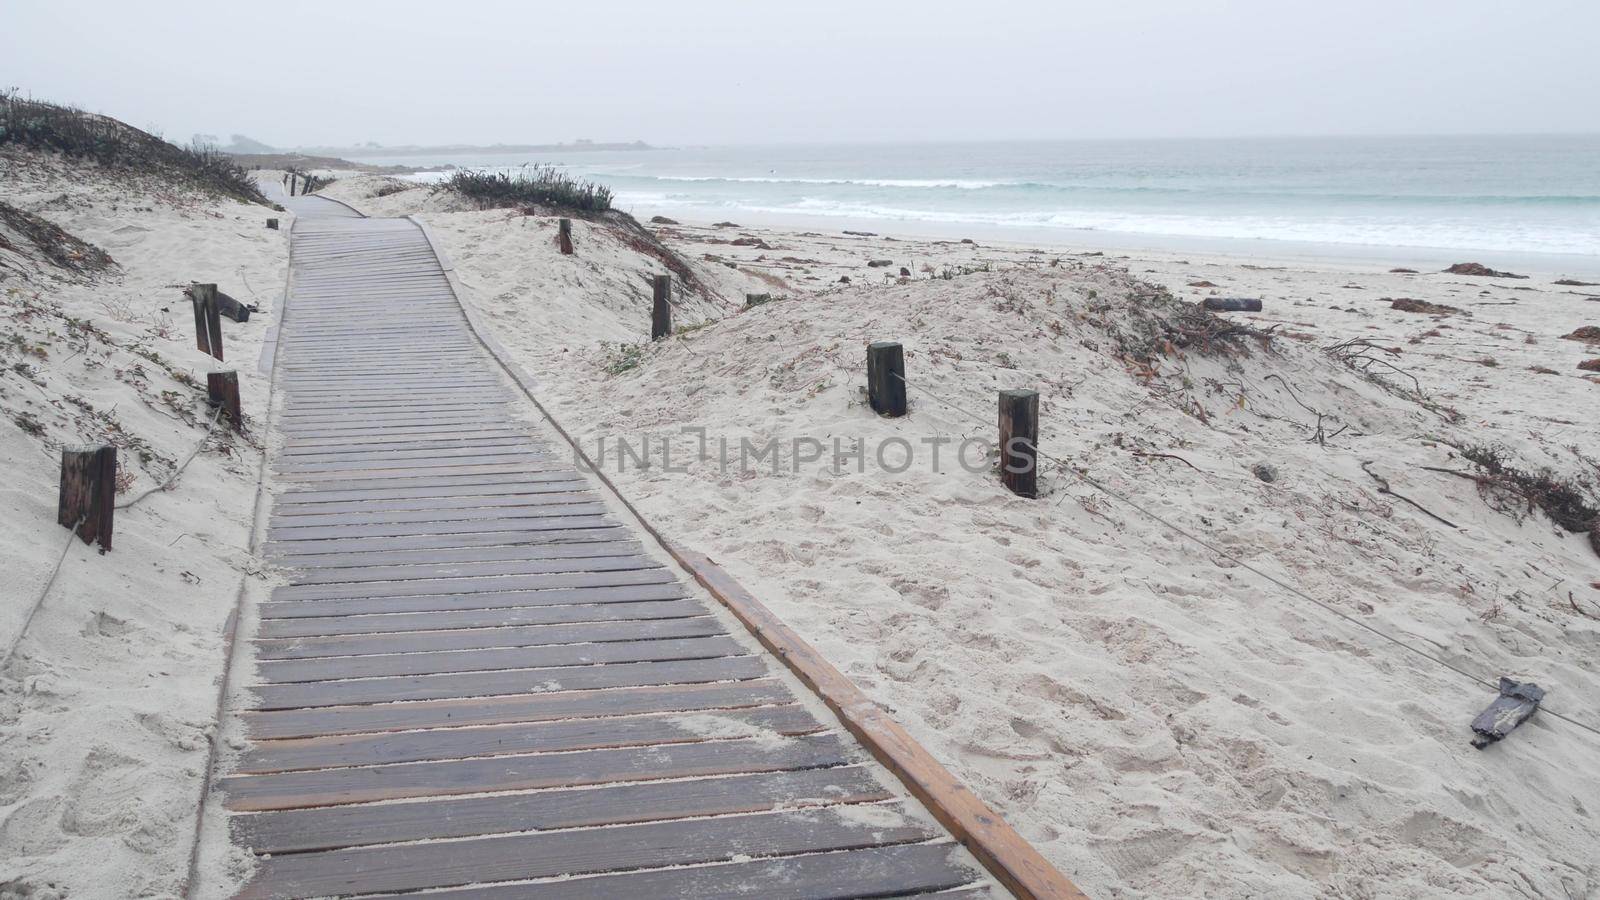 Ocean beach sandy dunes, Monterey nature, California misty coast, USA. Foggy rainy calm autumn or winter weather, grey cloudy sky. Trail path on shore near cold sea waves. Boardwalk from wooden planks